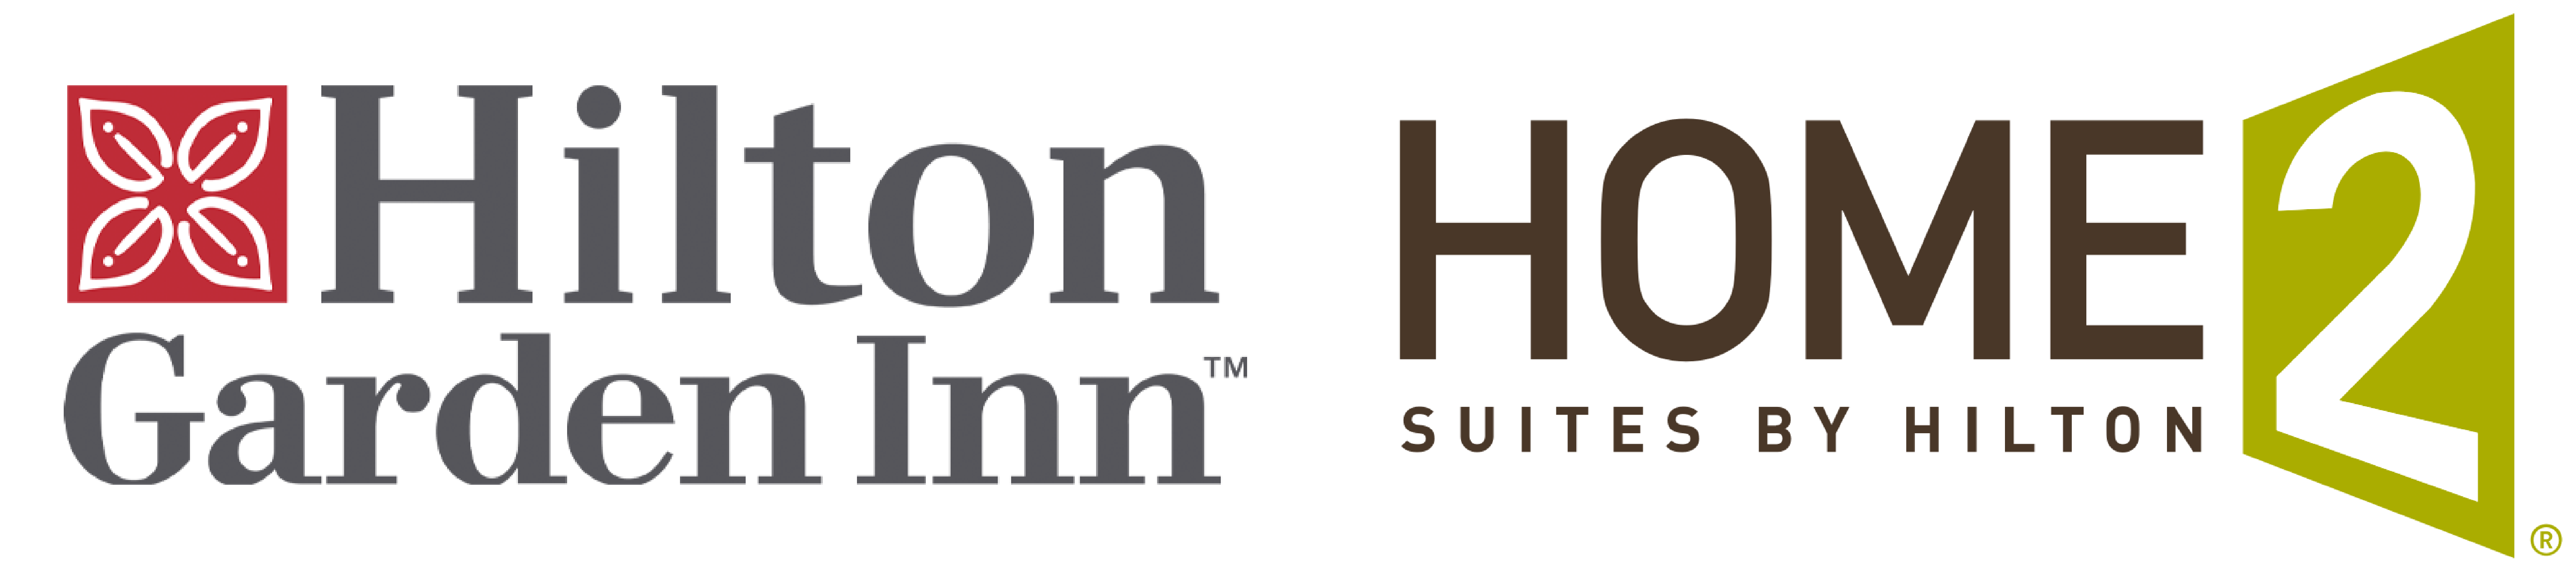 Hilton Garden Inn Home 2 Suites - Gold